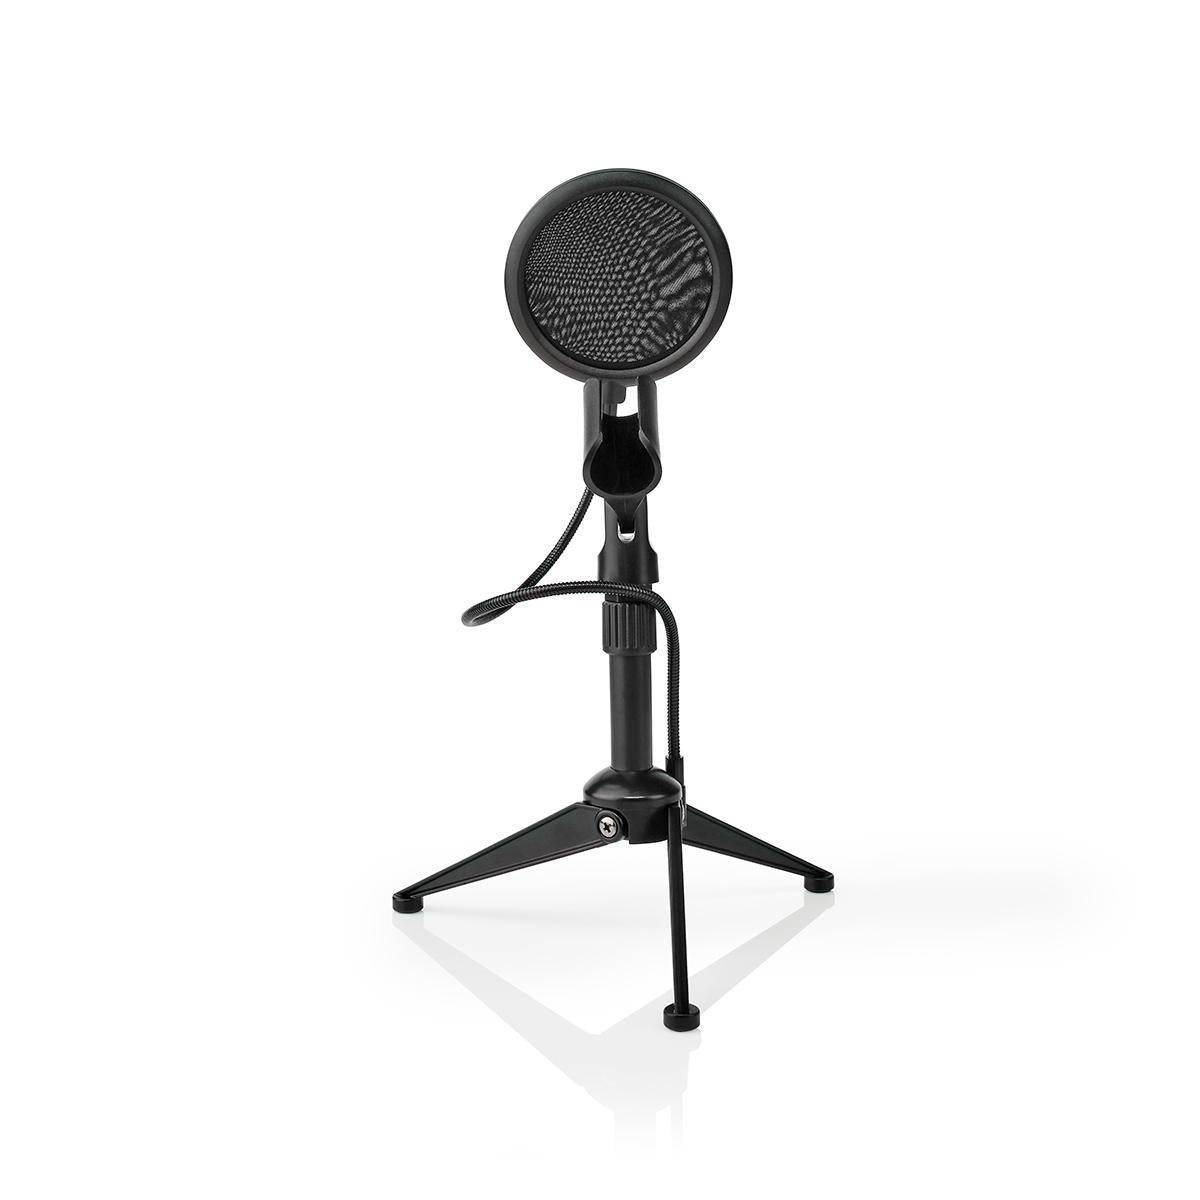 Mikrofonstativ mit Popschutz Mikrofon-Tisch-Ständer Halter + Popfilter Universal